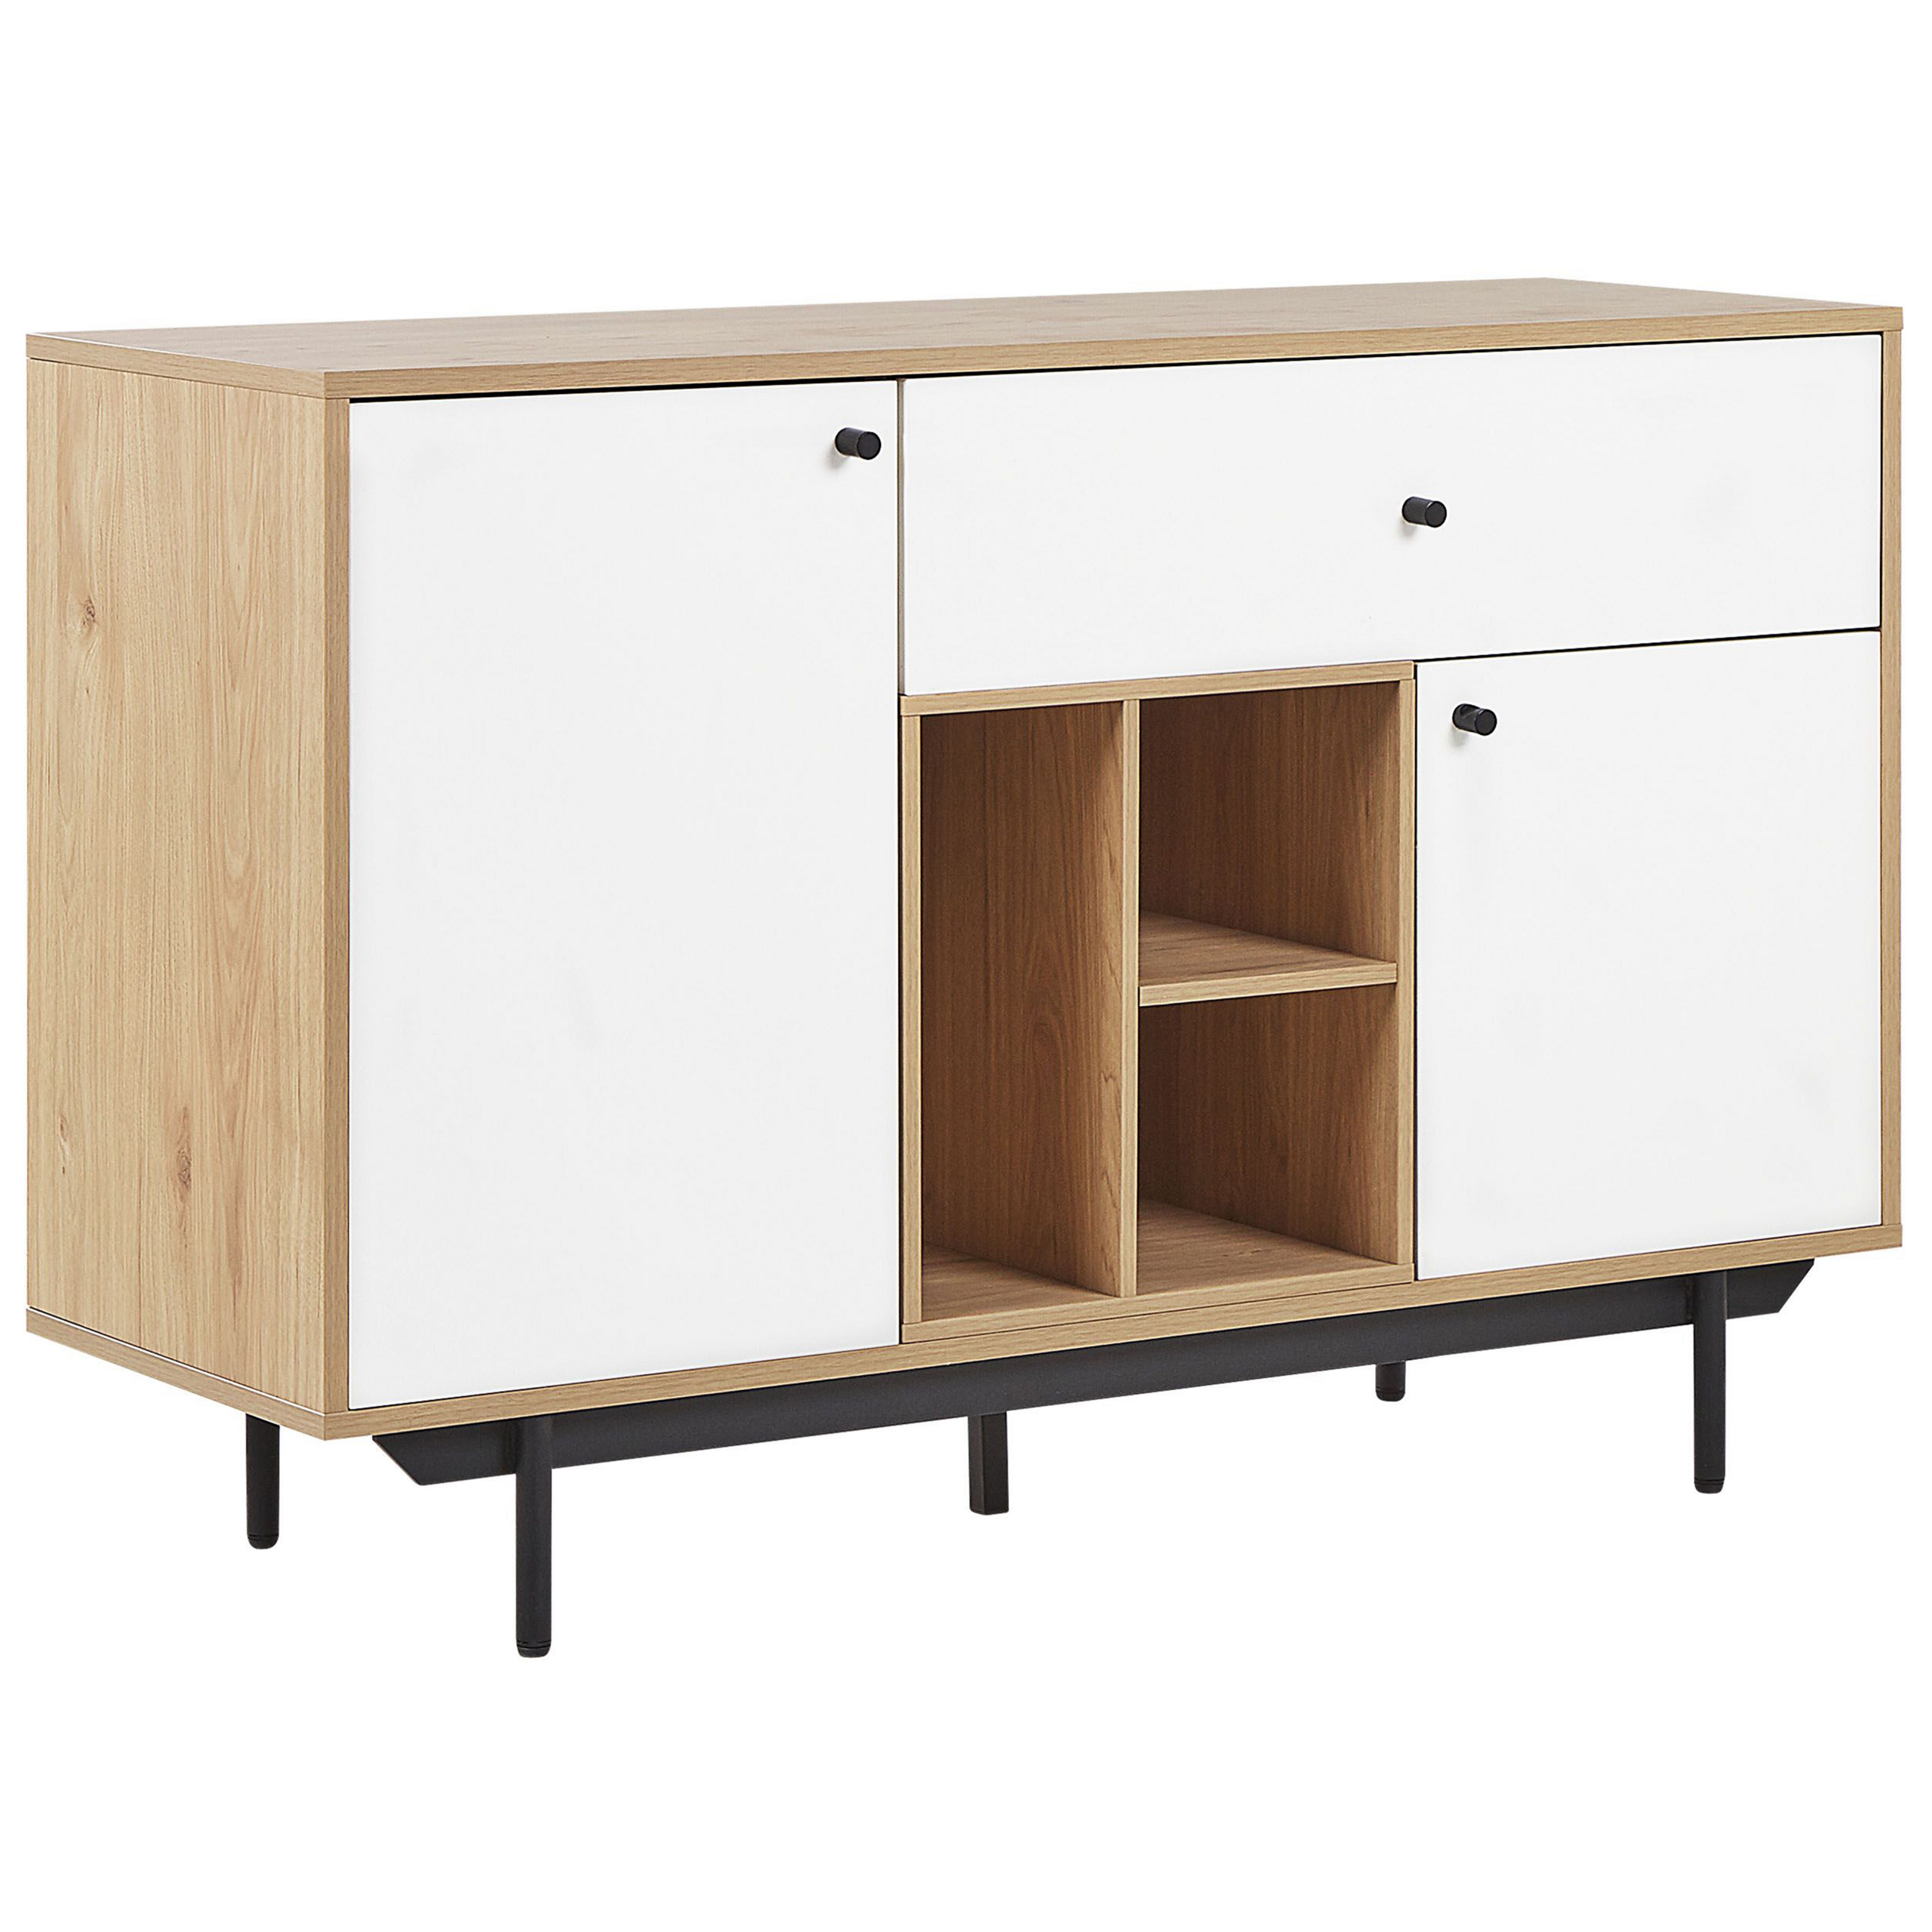 Beliani Sideboard Light Wood with White Engineered Wood Cabinets Shelves Drawer Storage Retro Style